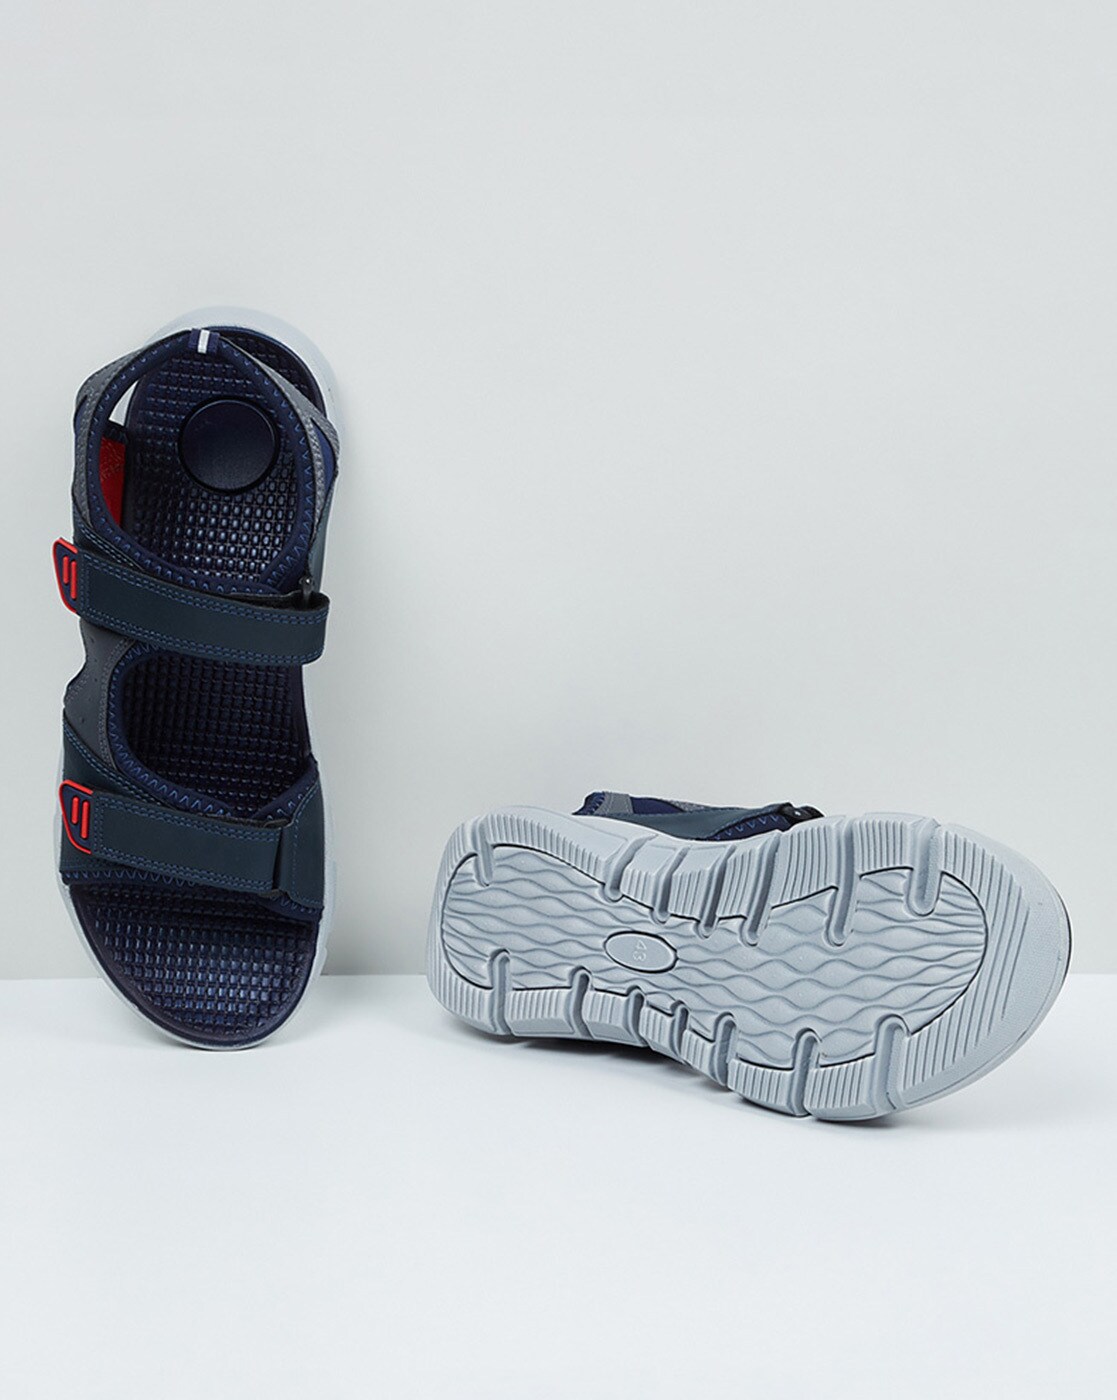 Buy Navy Sandals for Men by MAX Online